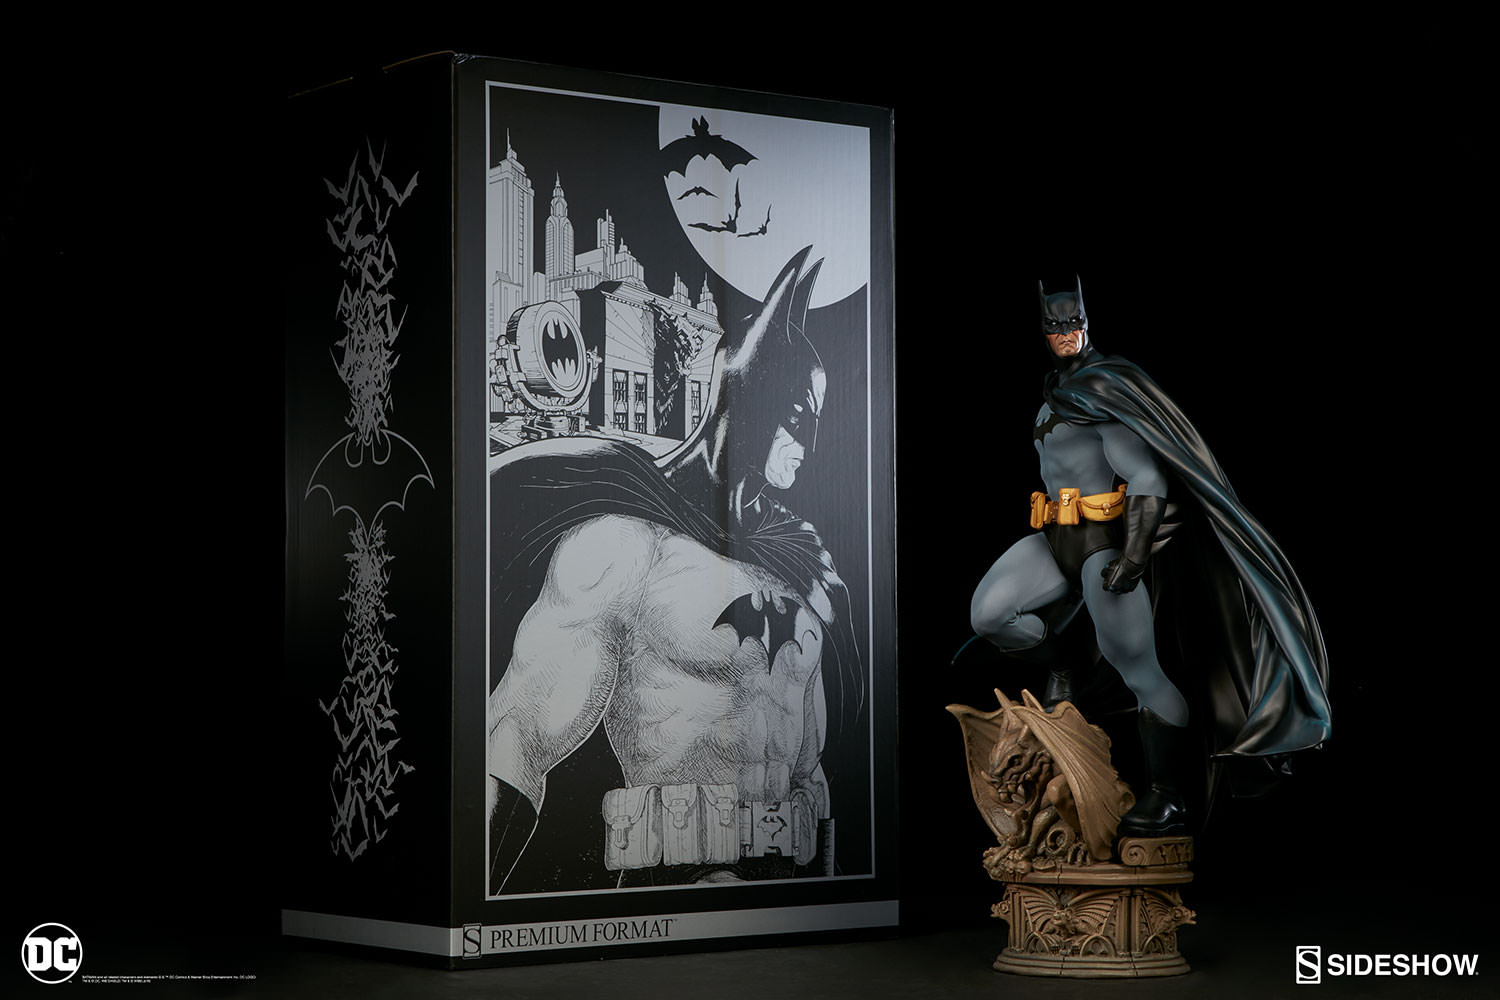 Бэтмен премиум коллекция. Коллекционная статуя 1/4 Scale. Sideshow Bullseye Statue Exclusive Edition. Dark Duck фигурка коллекционная. Batman premium edition